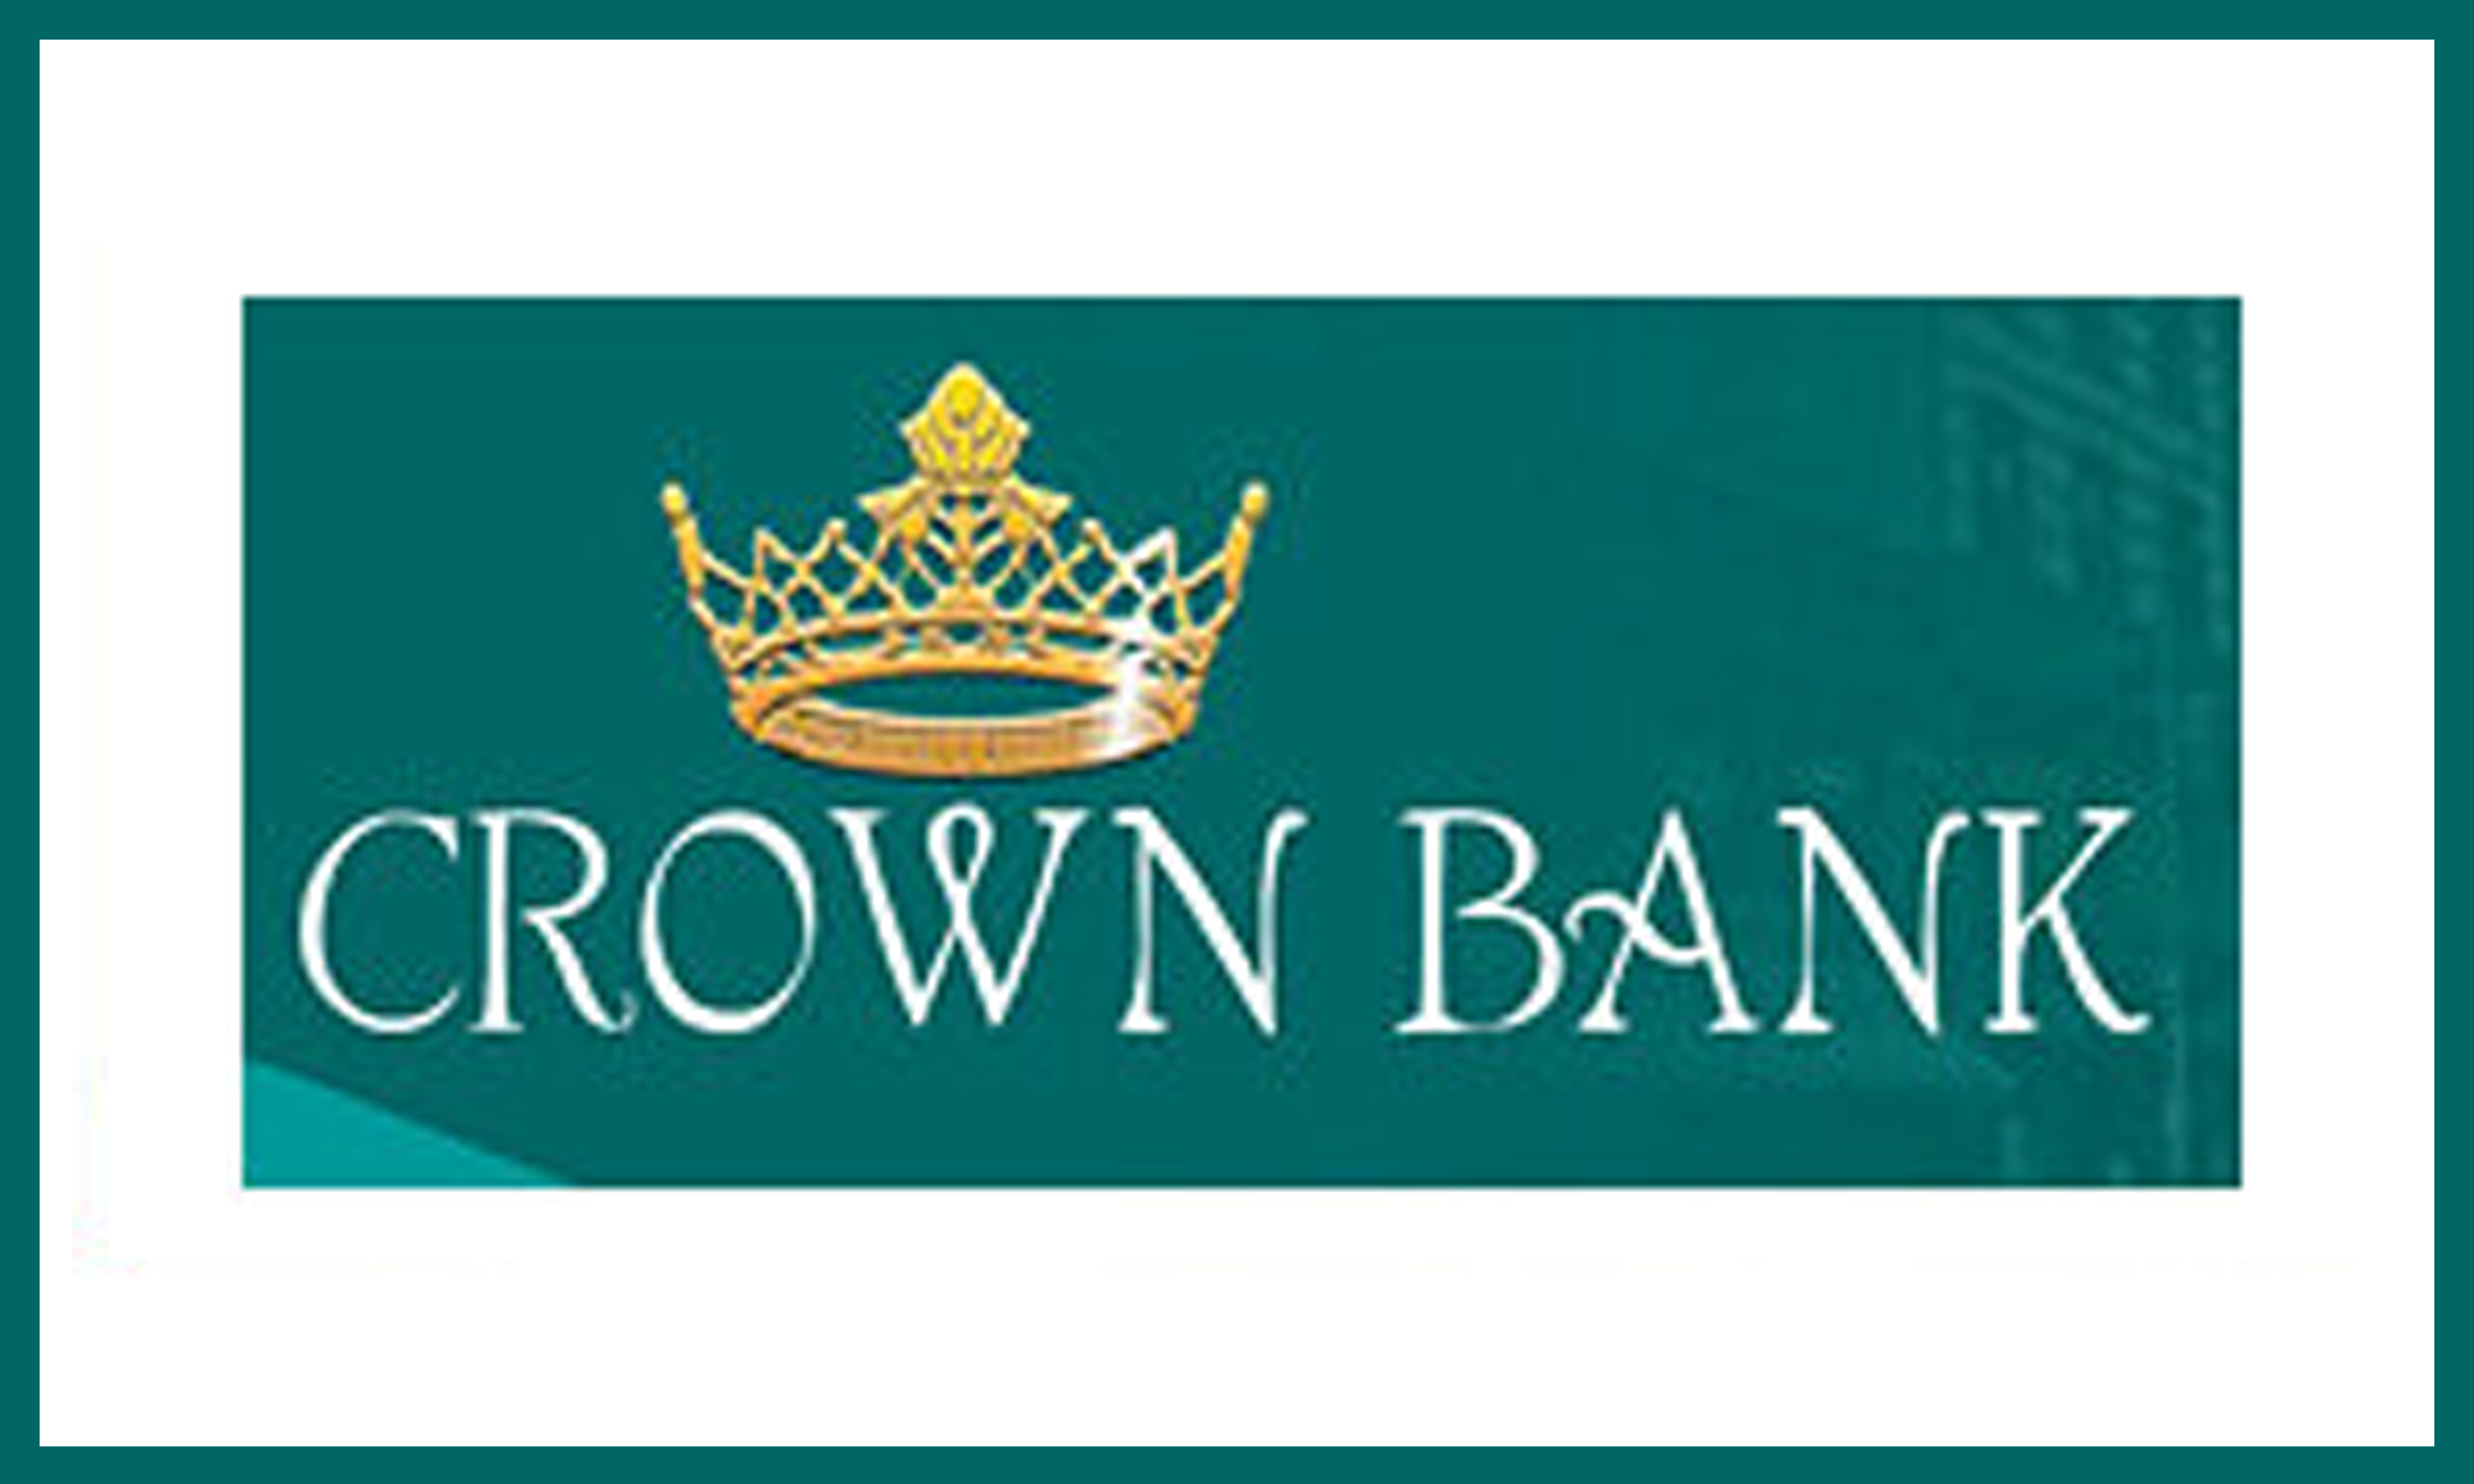 Crown Bank